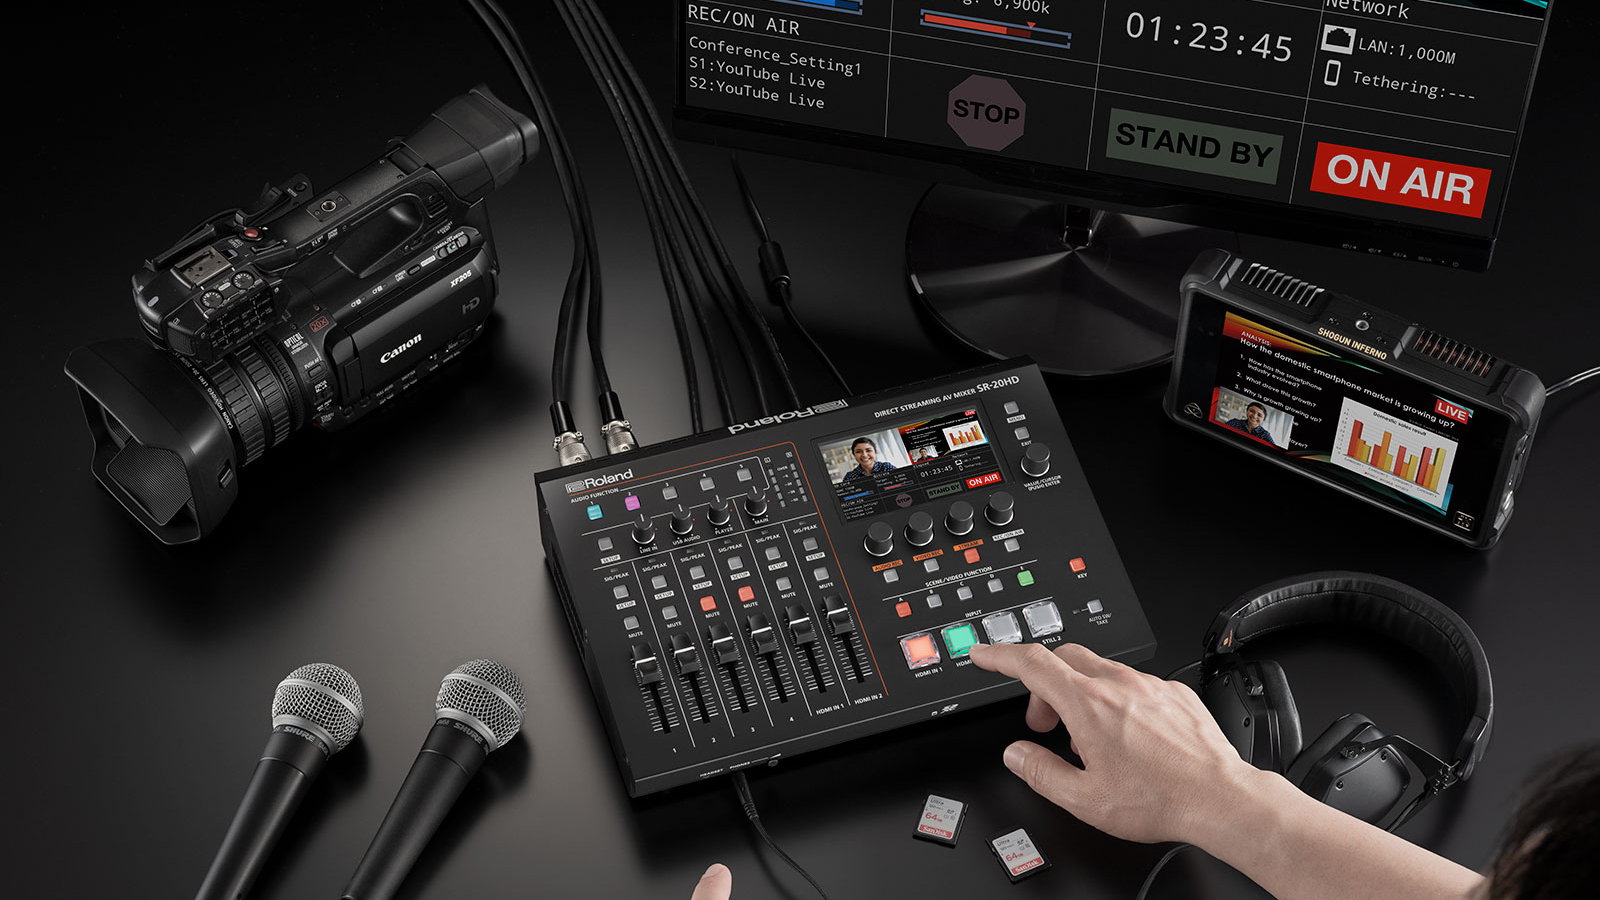 Roland SR-20HD, a new AV mixer for direct streaming